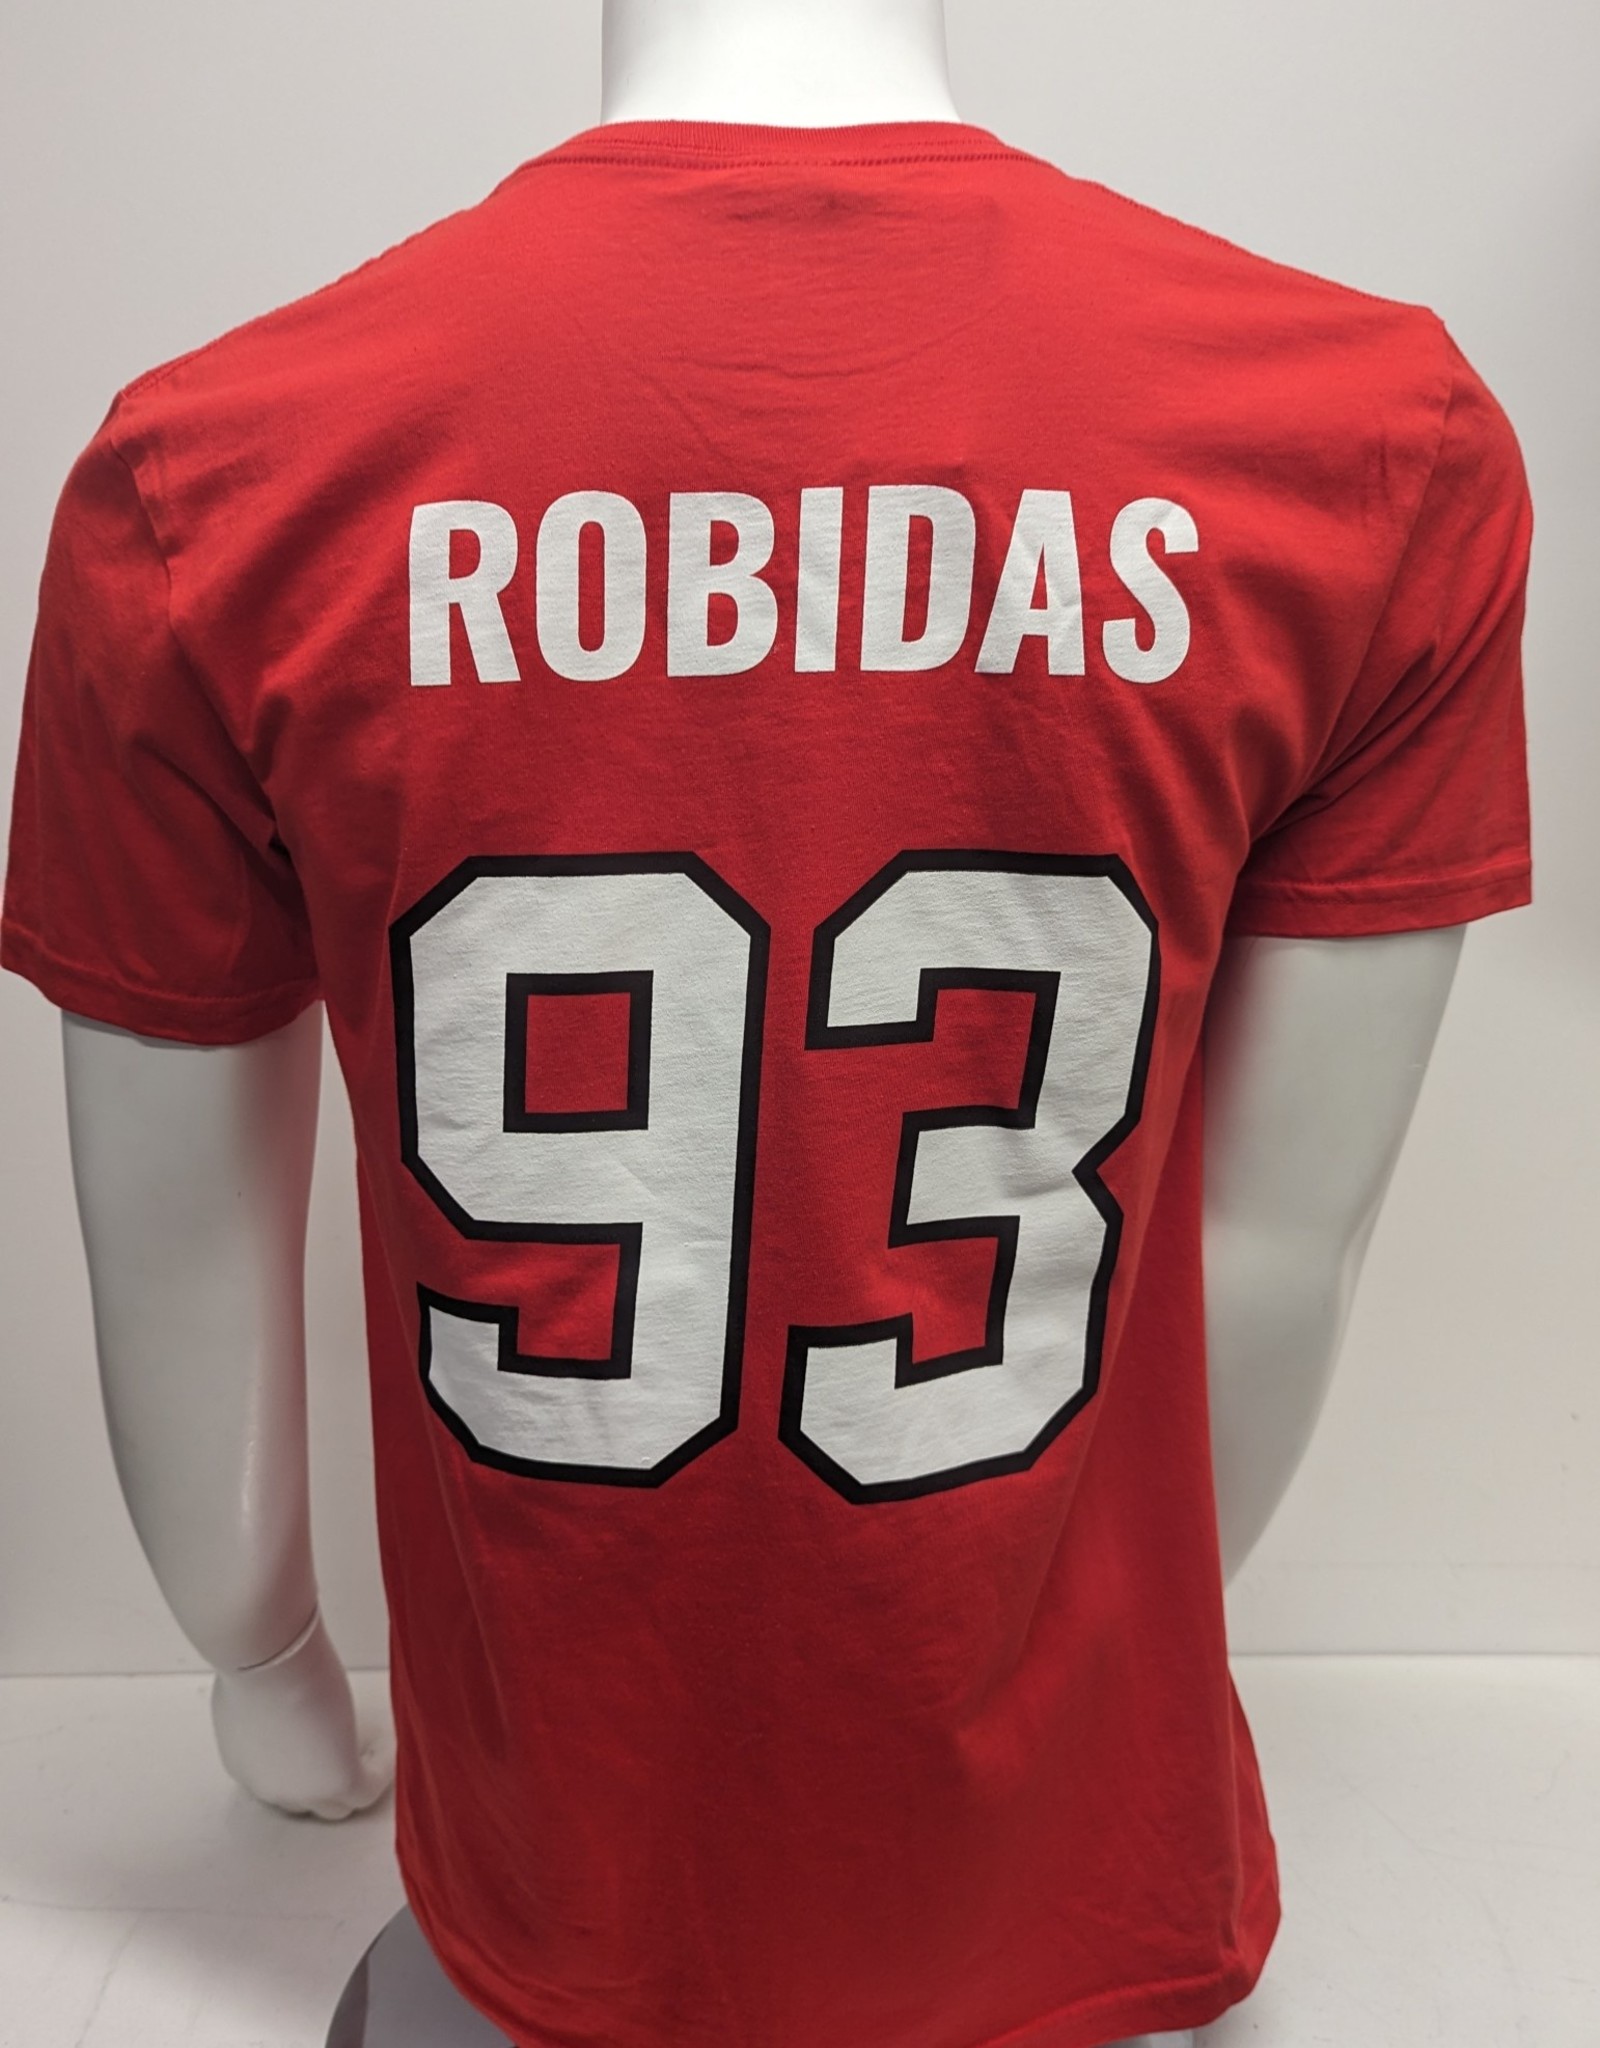 T-Shirt Rouge Robidas 93